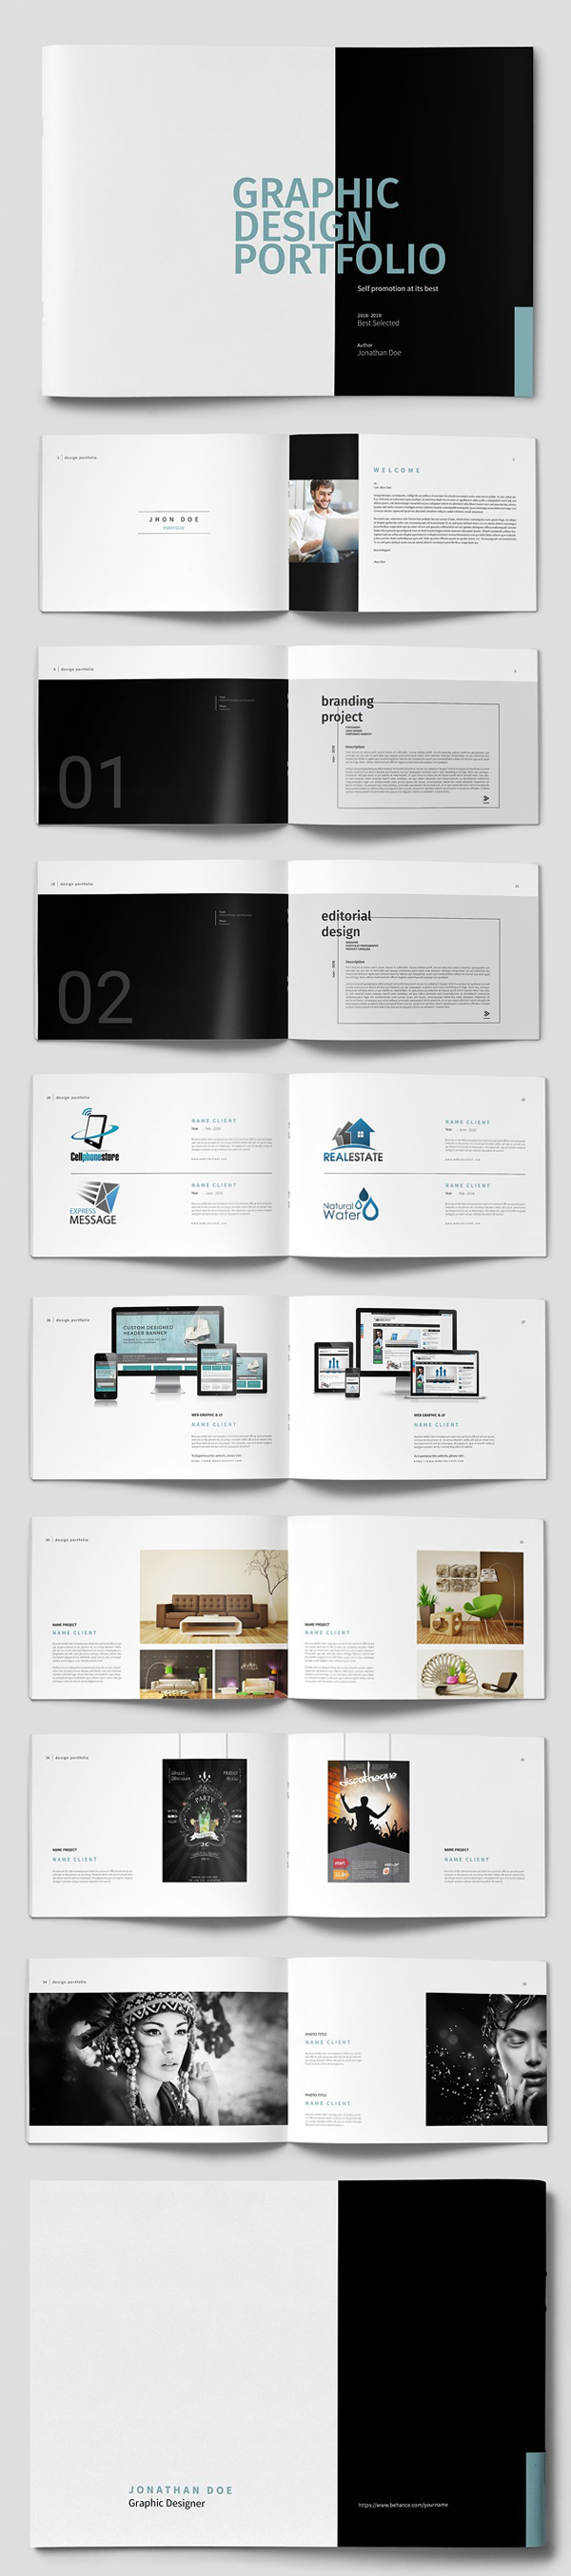 50+ Pages Graphic Design Portfolio Template